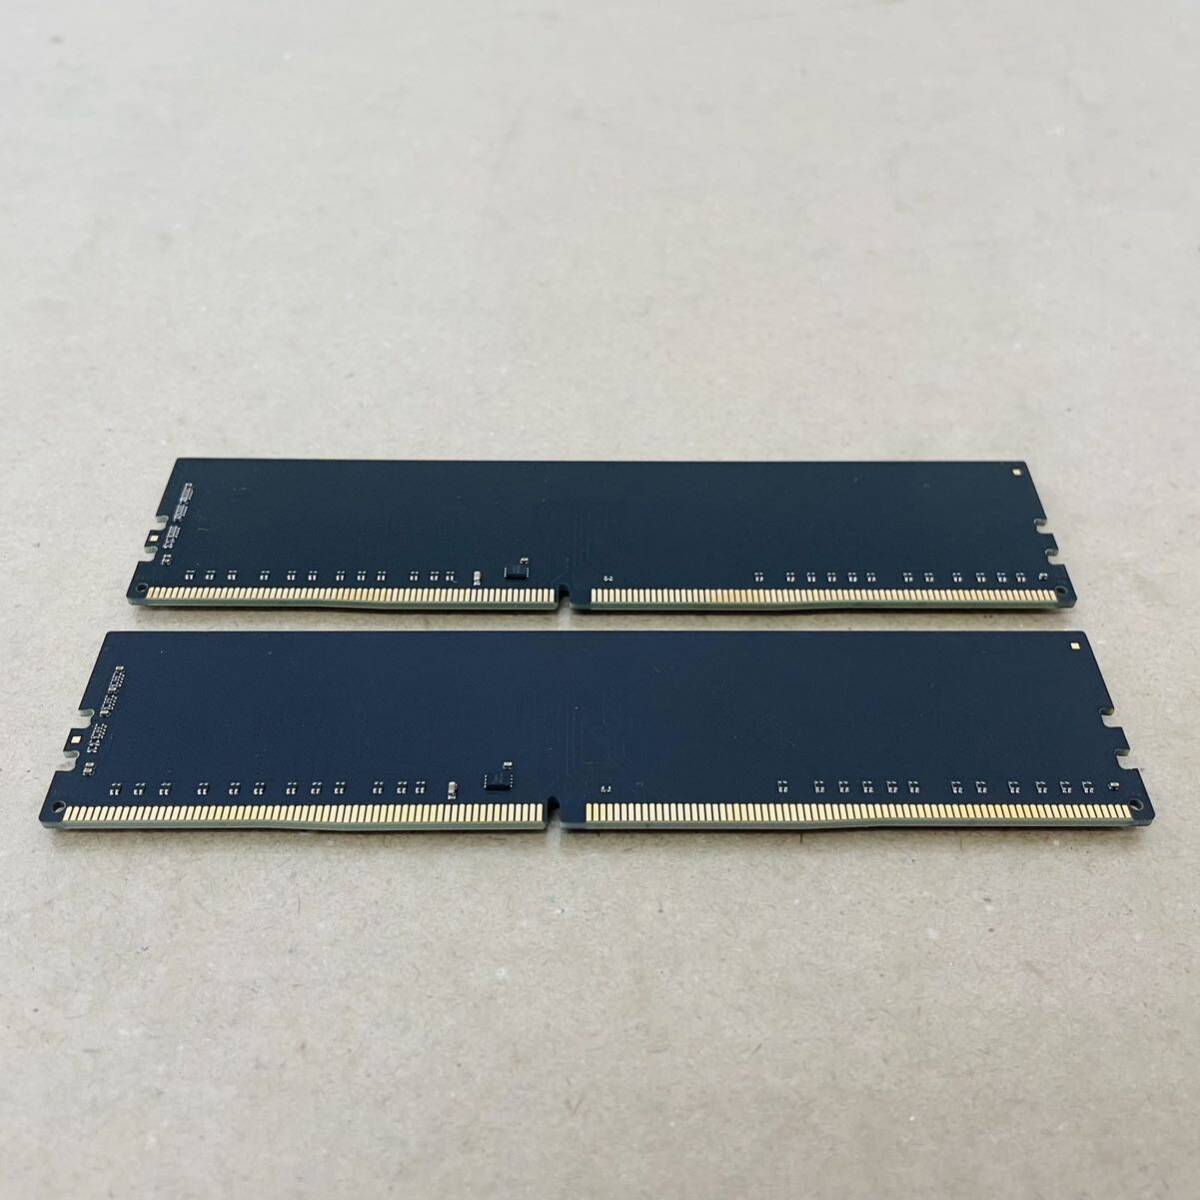  Panram  メモリ DDR4-2666 (8GB×2)  (W4U2666PS-8GC19)  i18133  ネコポス発送 動作未確認  目立った傷汚れなしの画像3